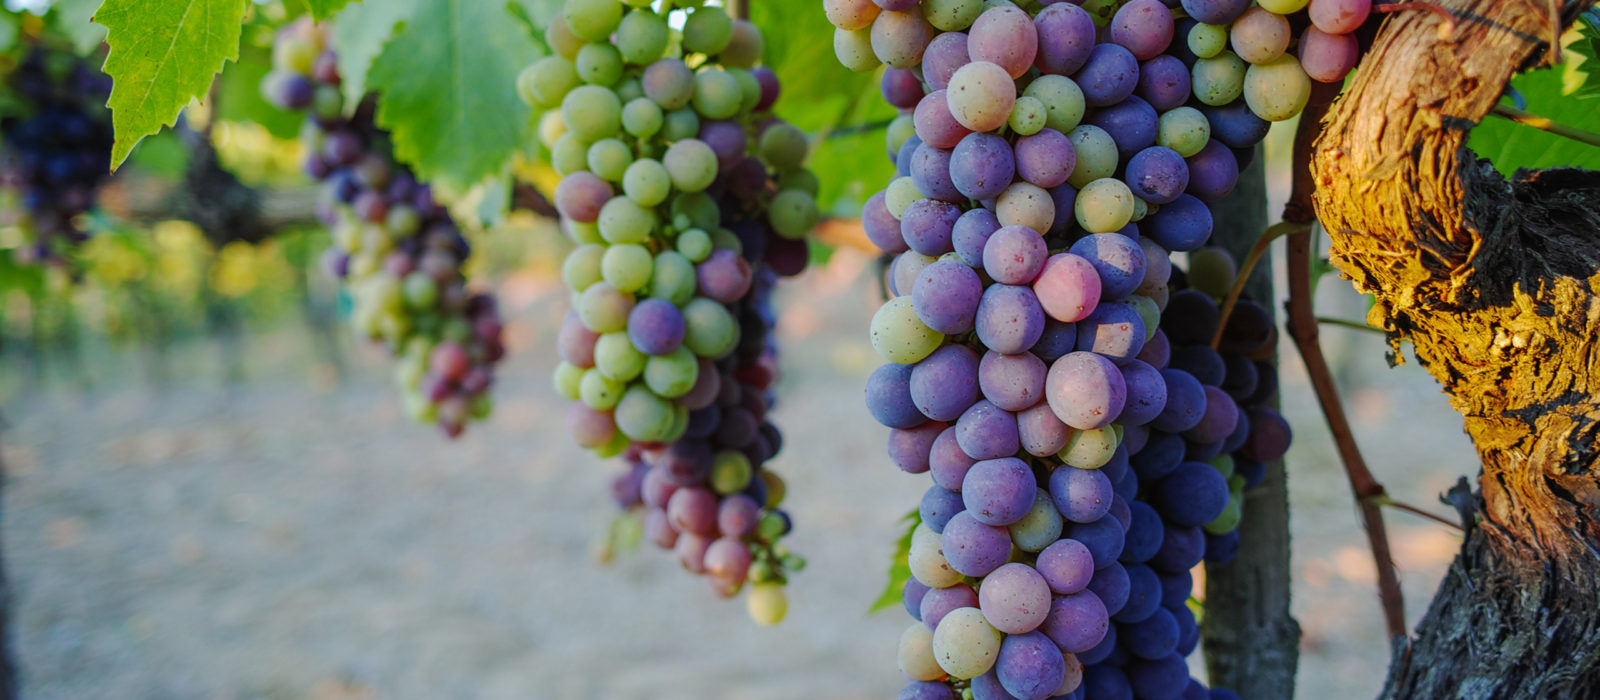 tuscany-grapes